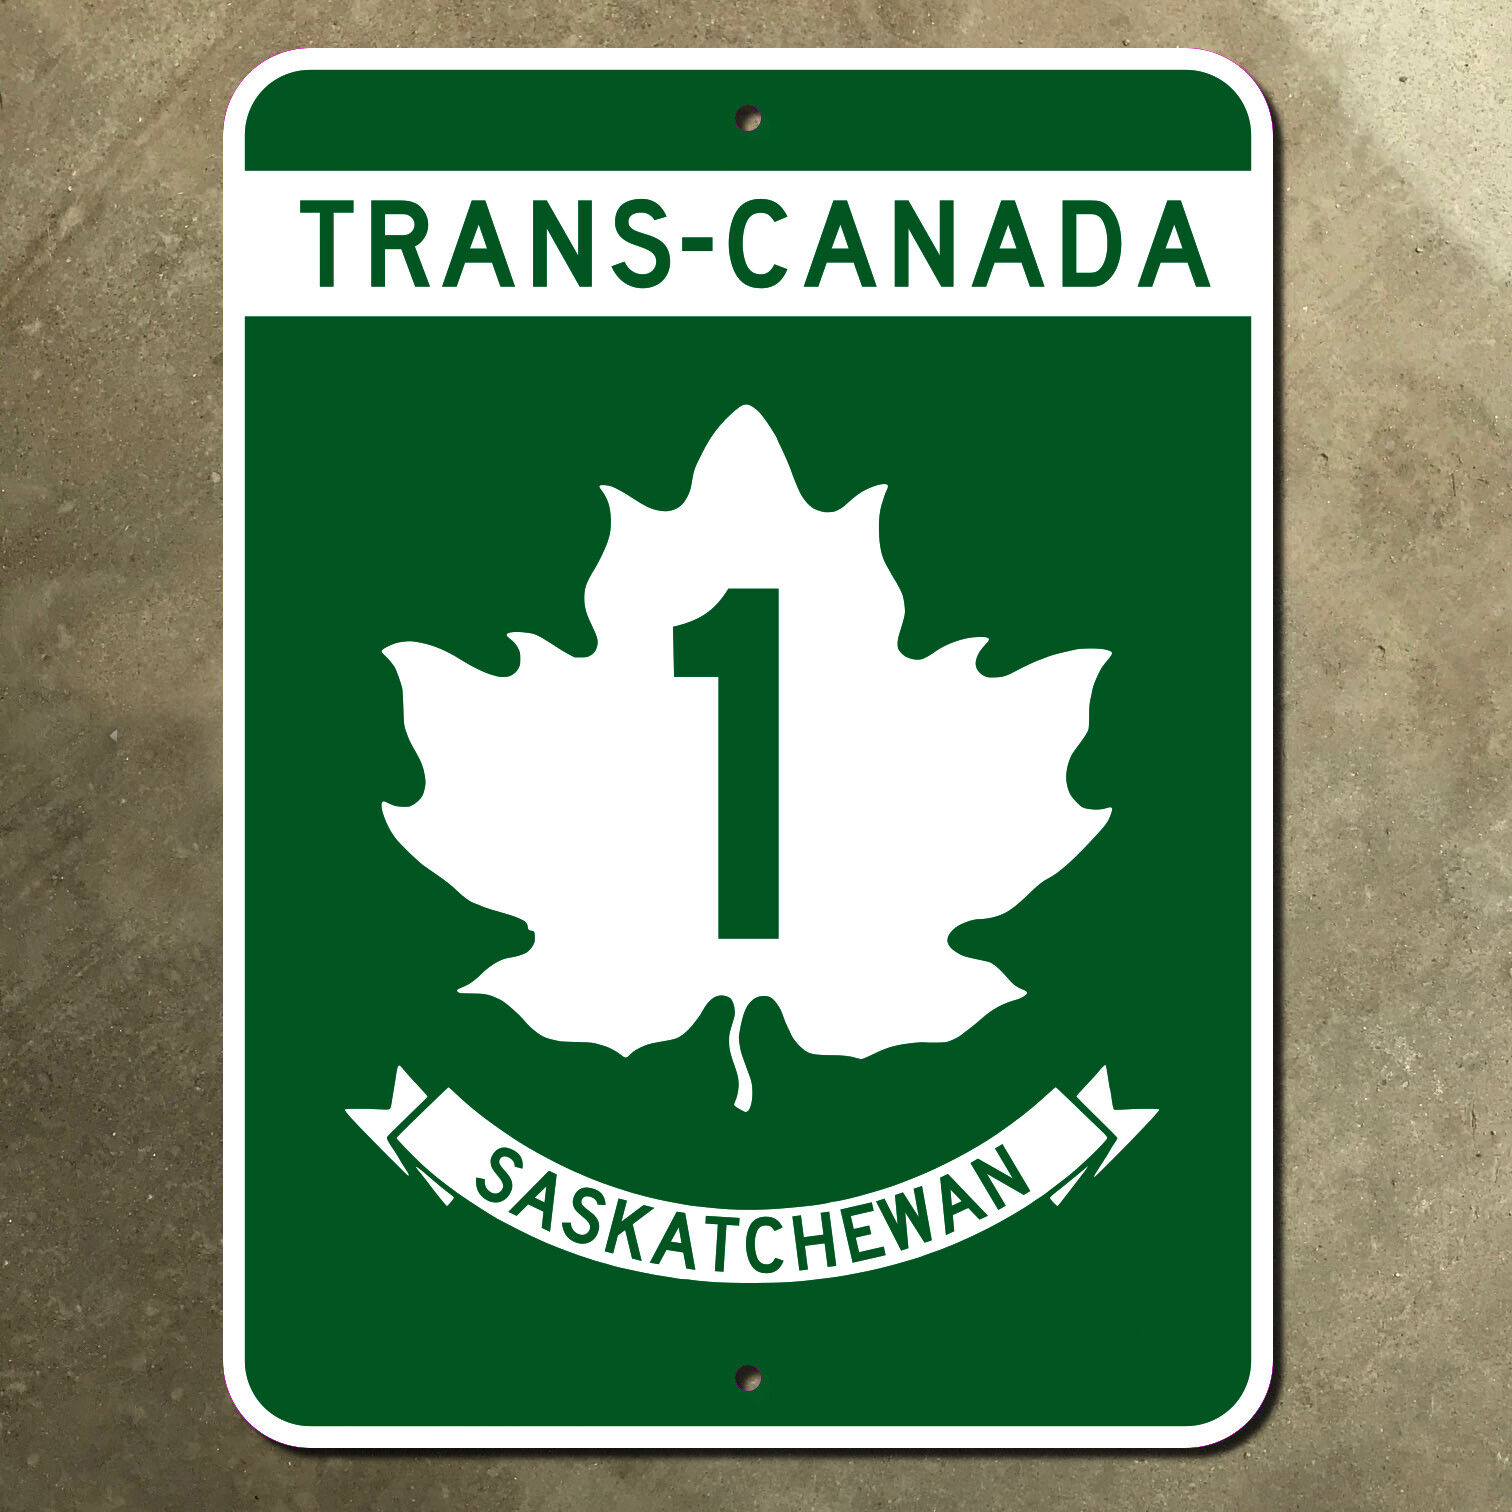 Canada Saskatchewan Trans-Canada Highway 1 Regina marker road sign 1980s 18x24